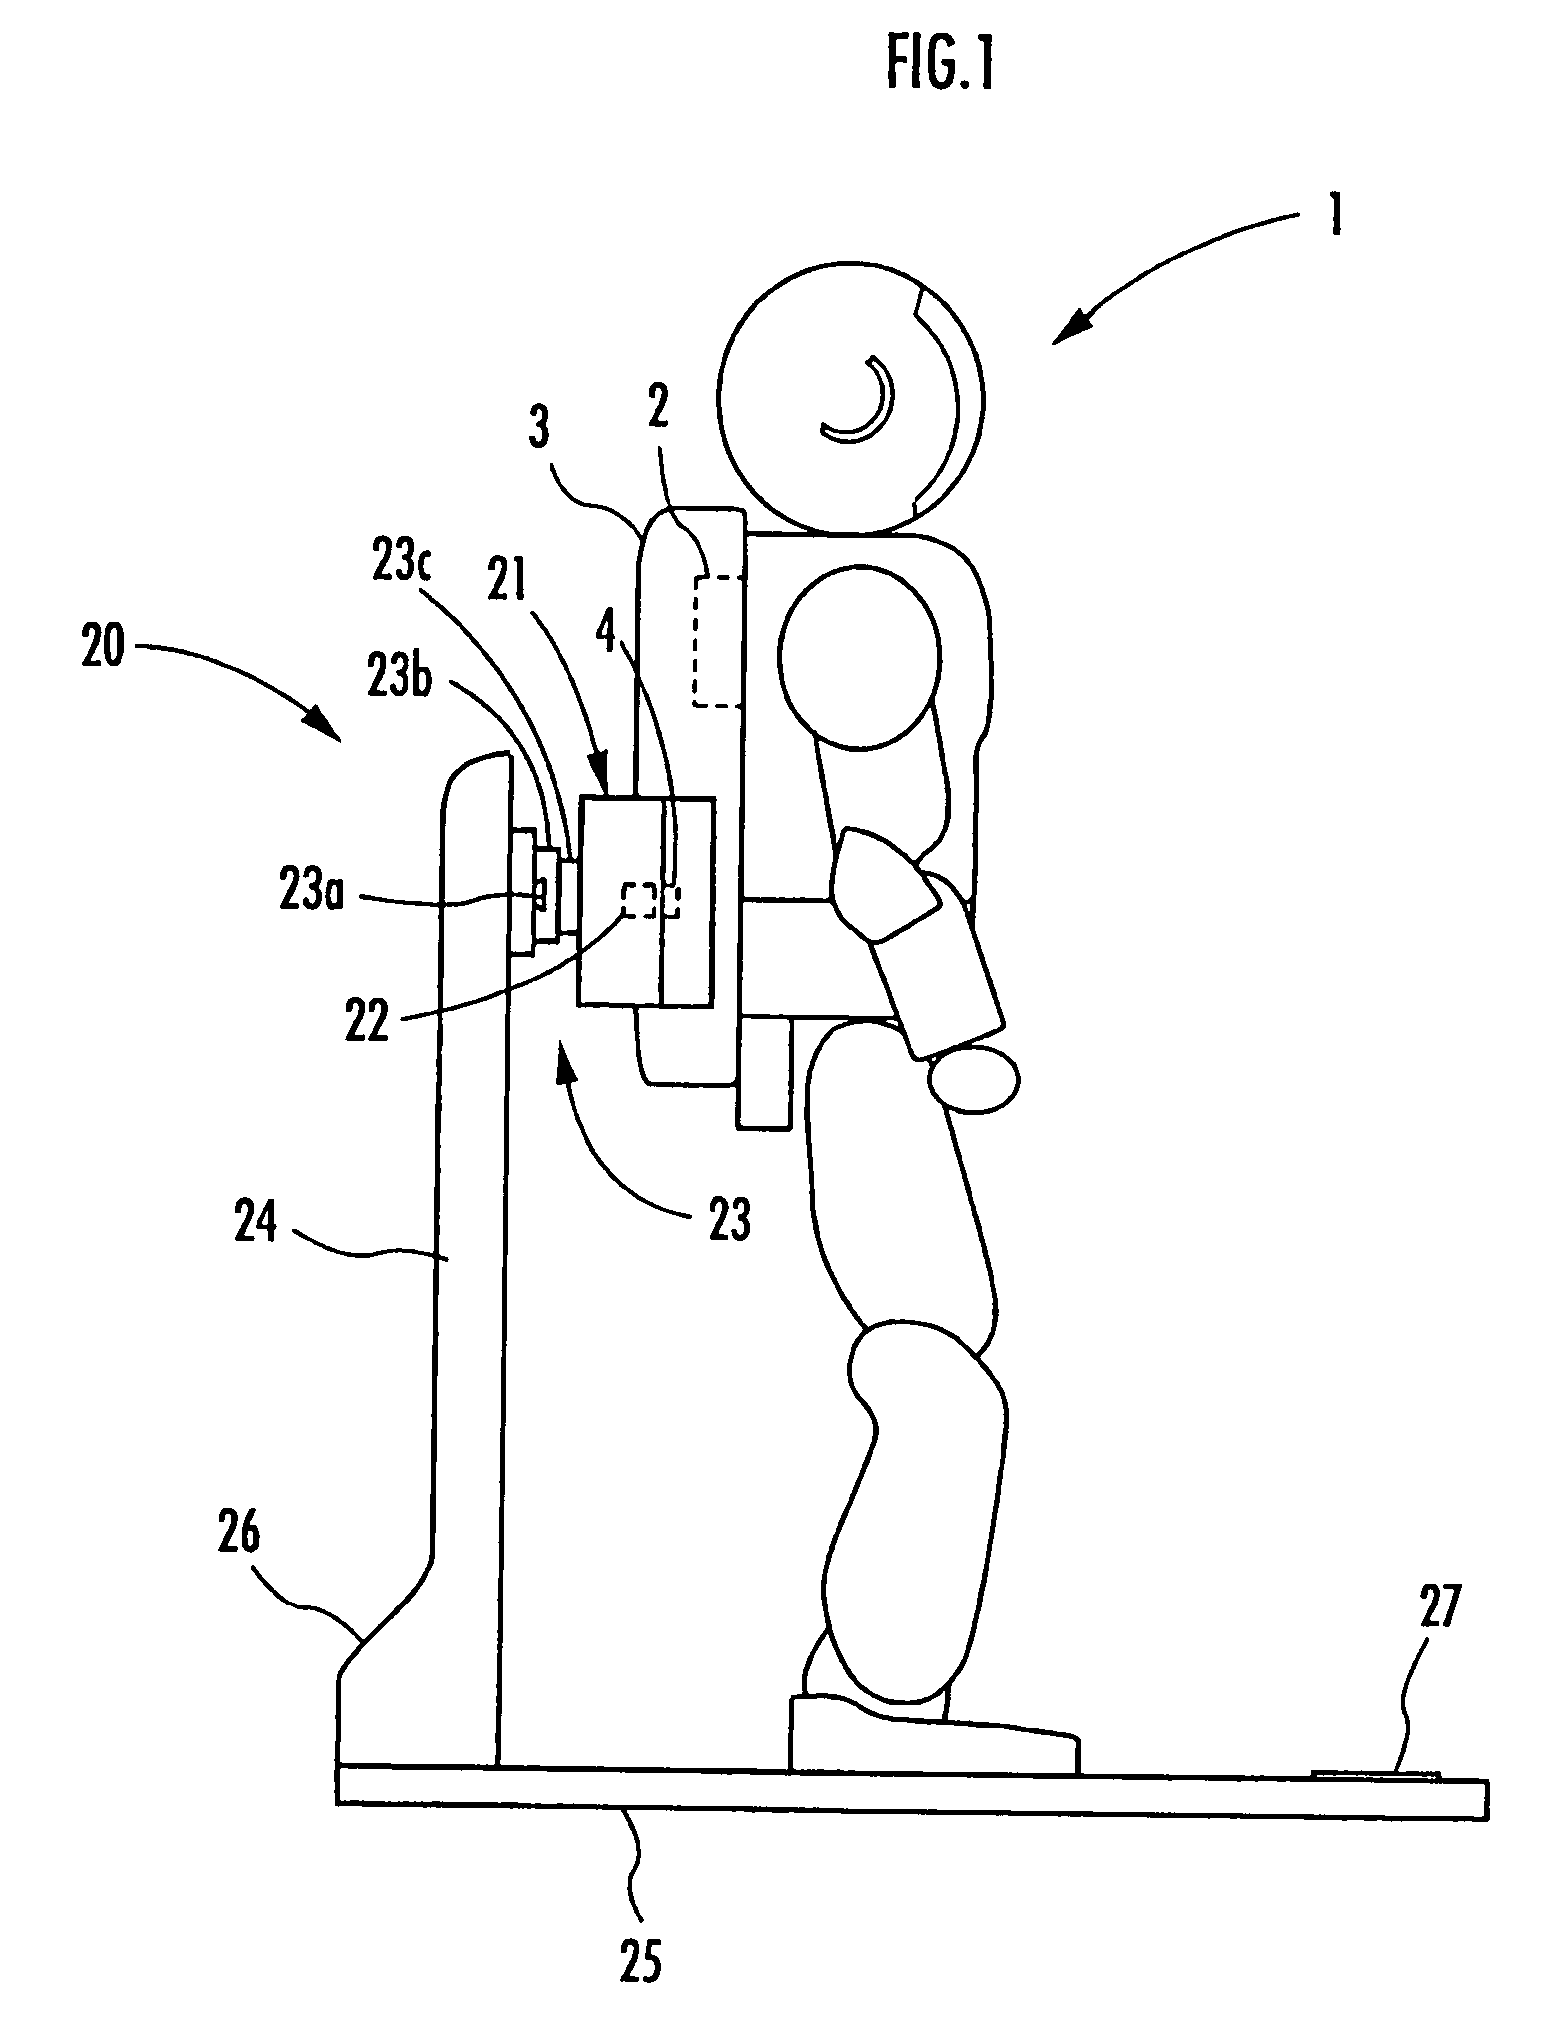 Charging system for legged mobile robot